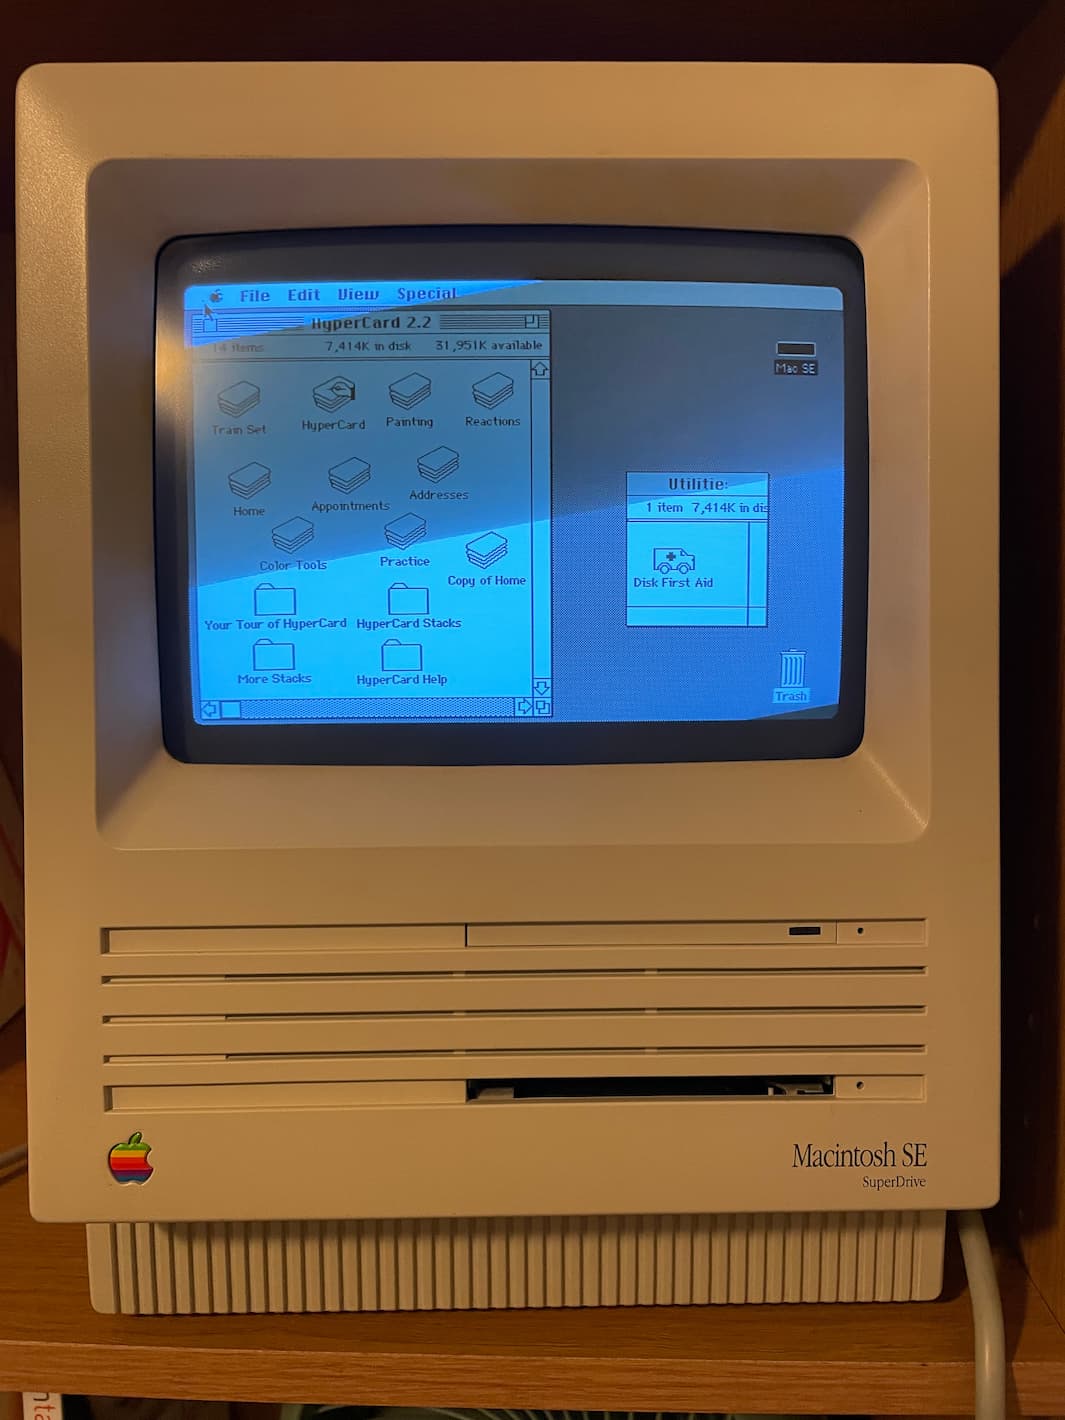 Macintosh SE with a HyperCard folder open